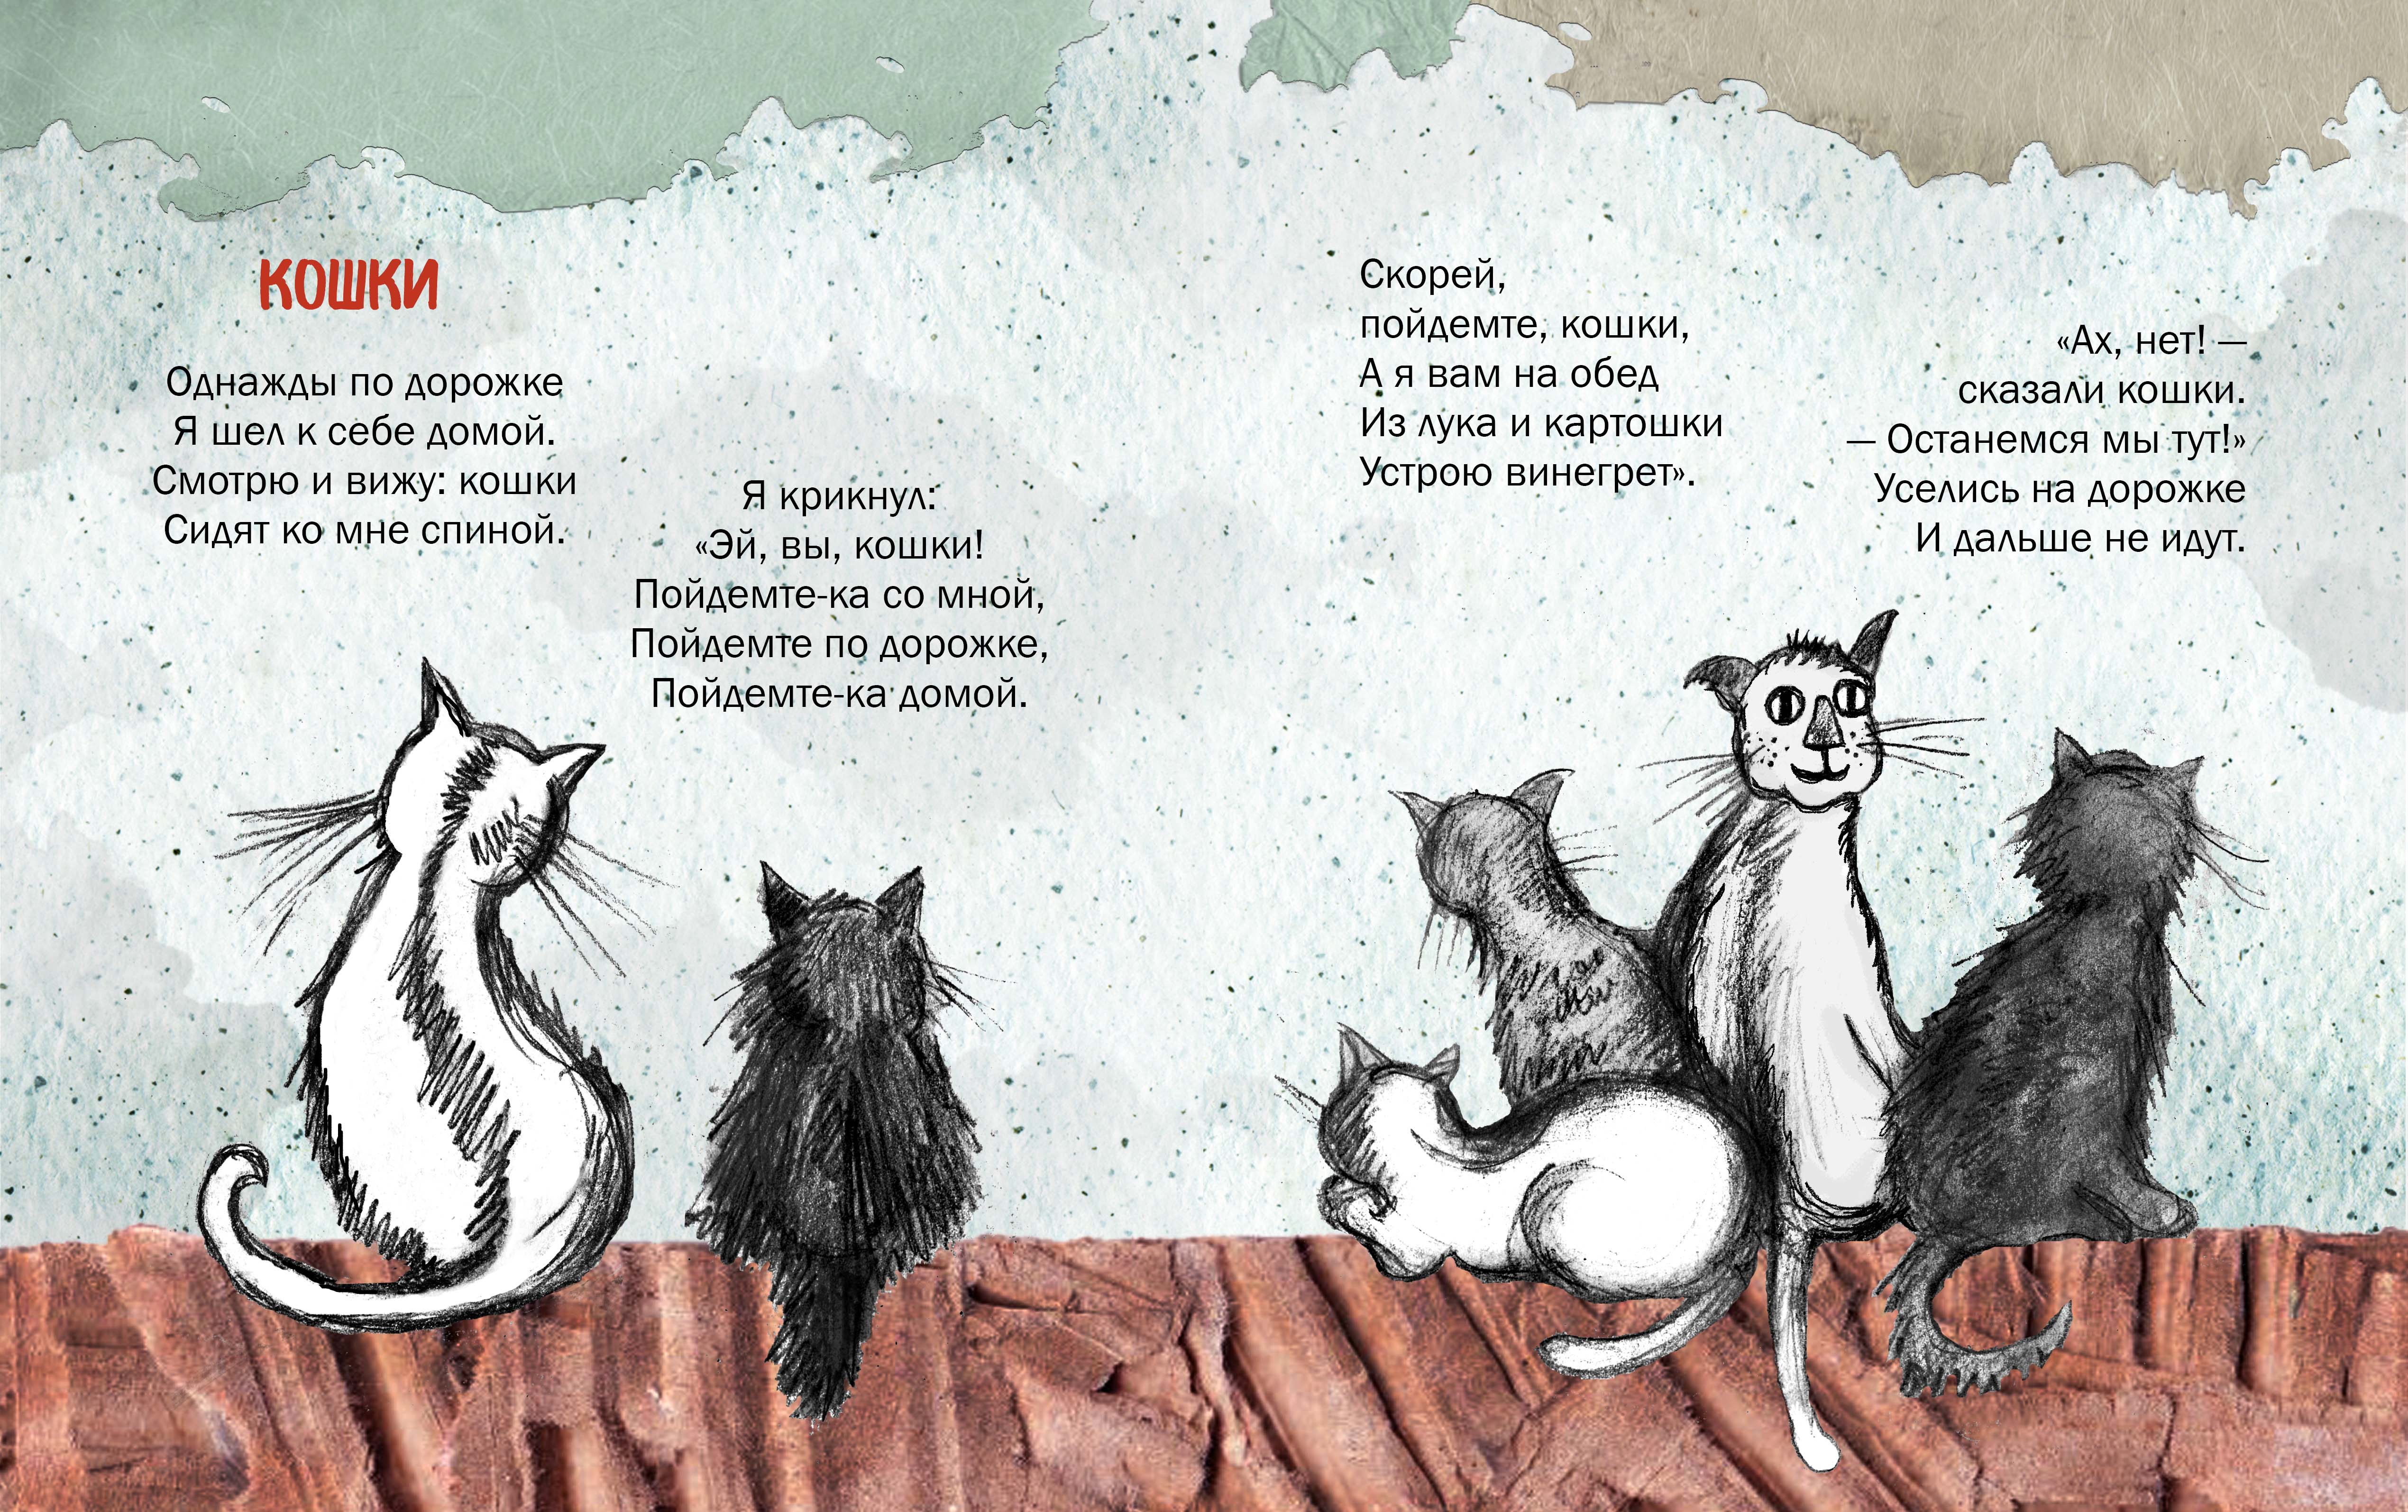 Кошки Даниил Хармс стихотворение